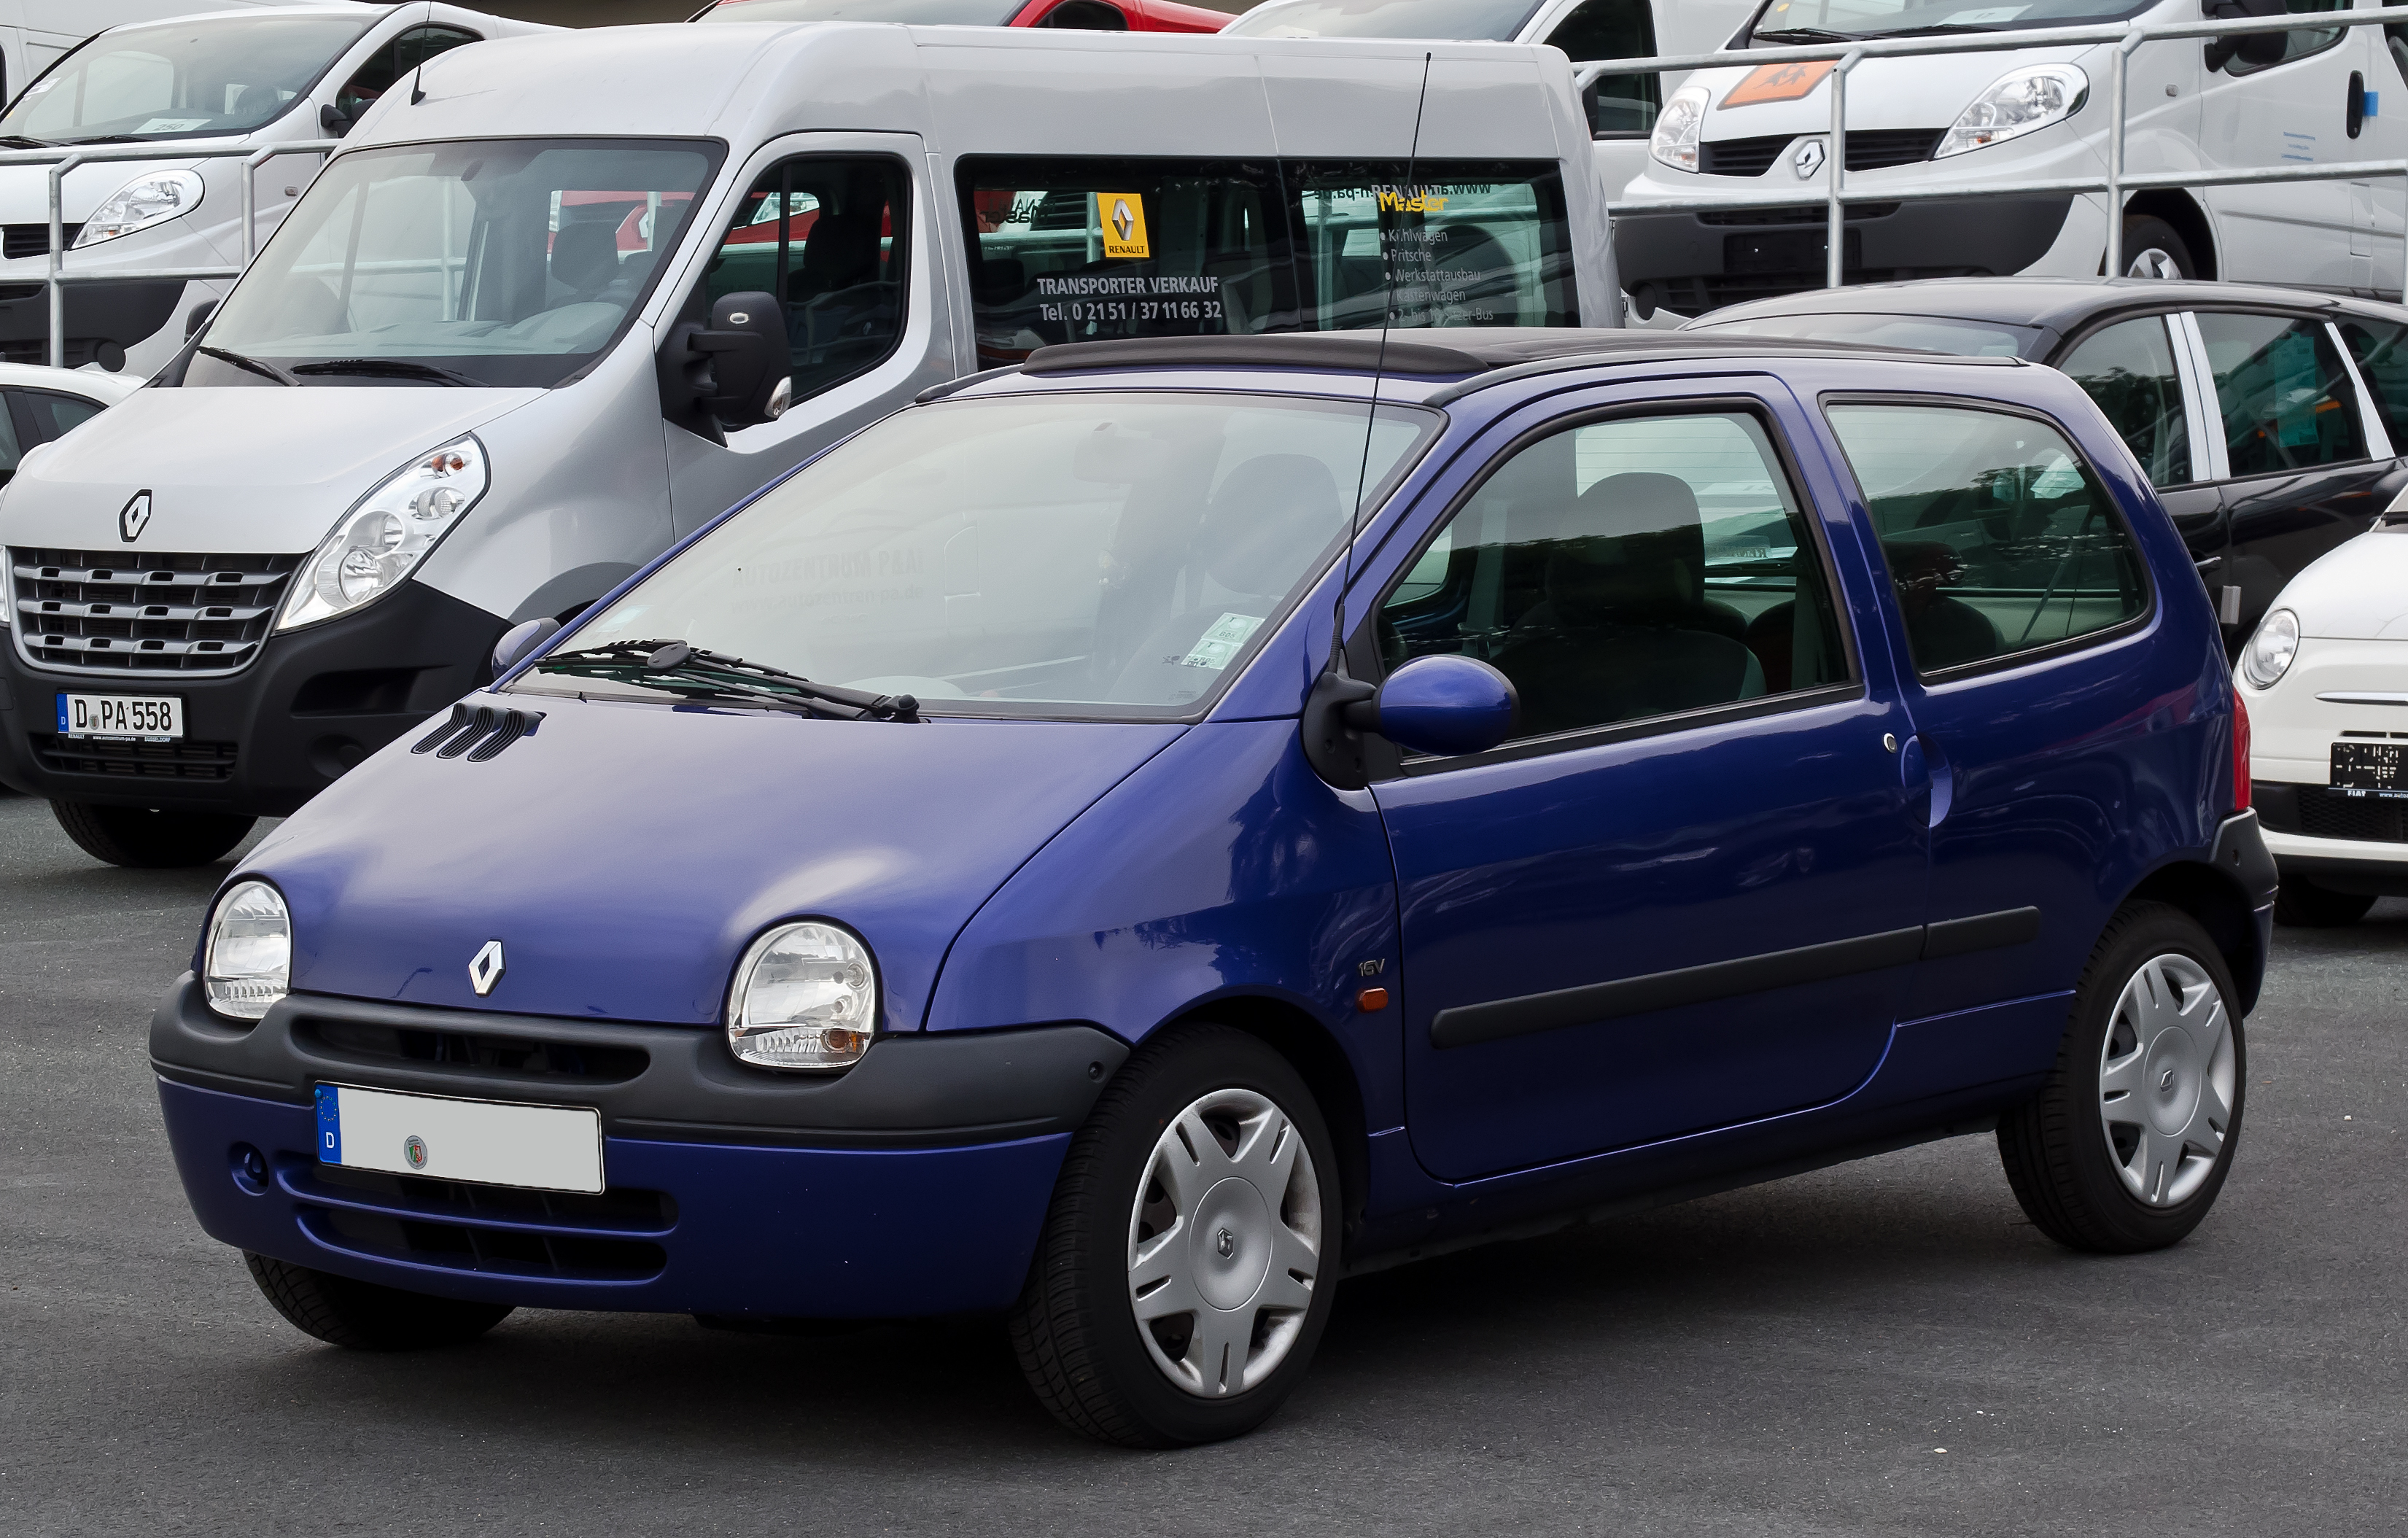 Renault Twingo - Wikipedia